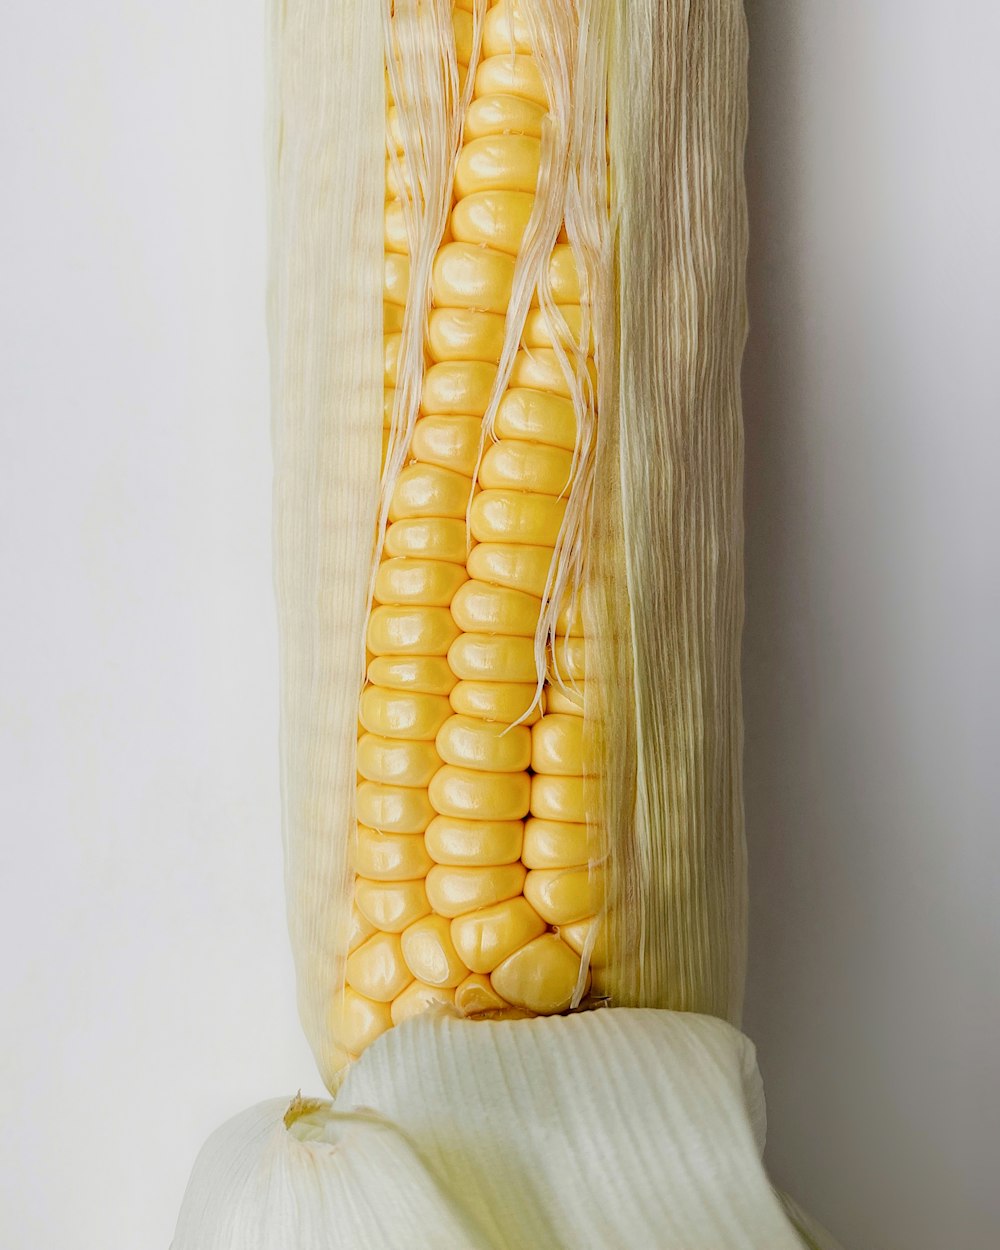 corn on white ceramic plate